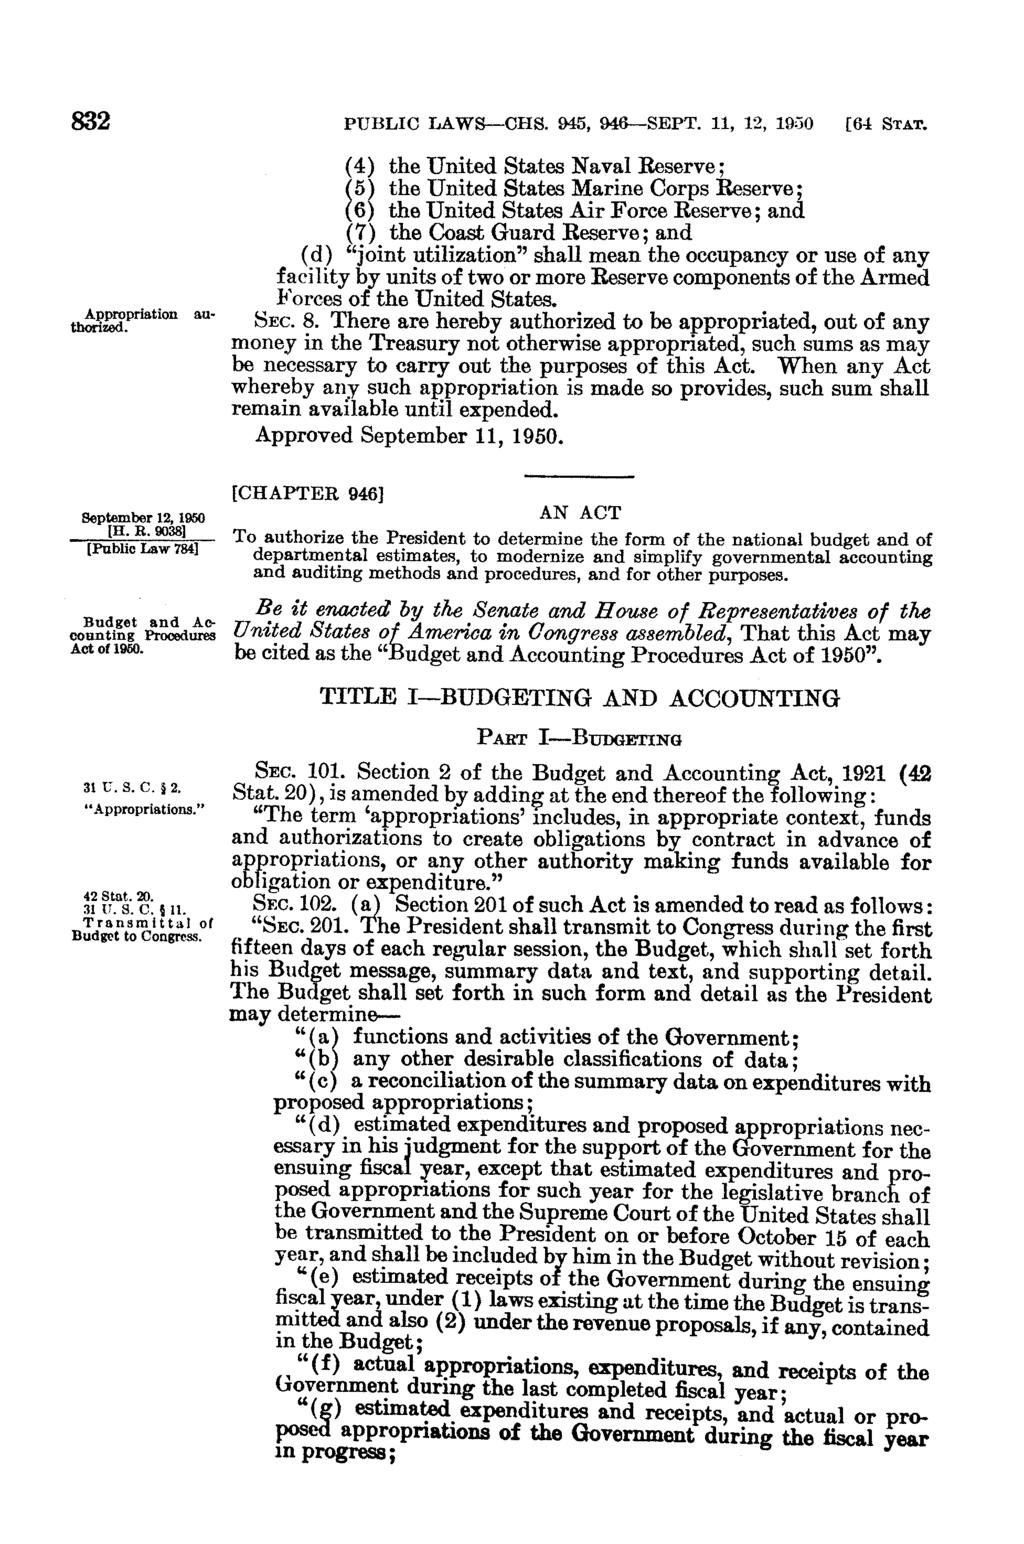 832 PUBLIC LAWS-CHS. 945, 946-SEPT. 11, 12, 1950 [64 STAT. au- Appropriation thorized.